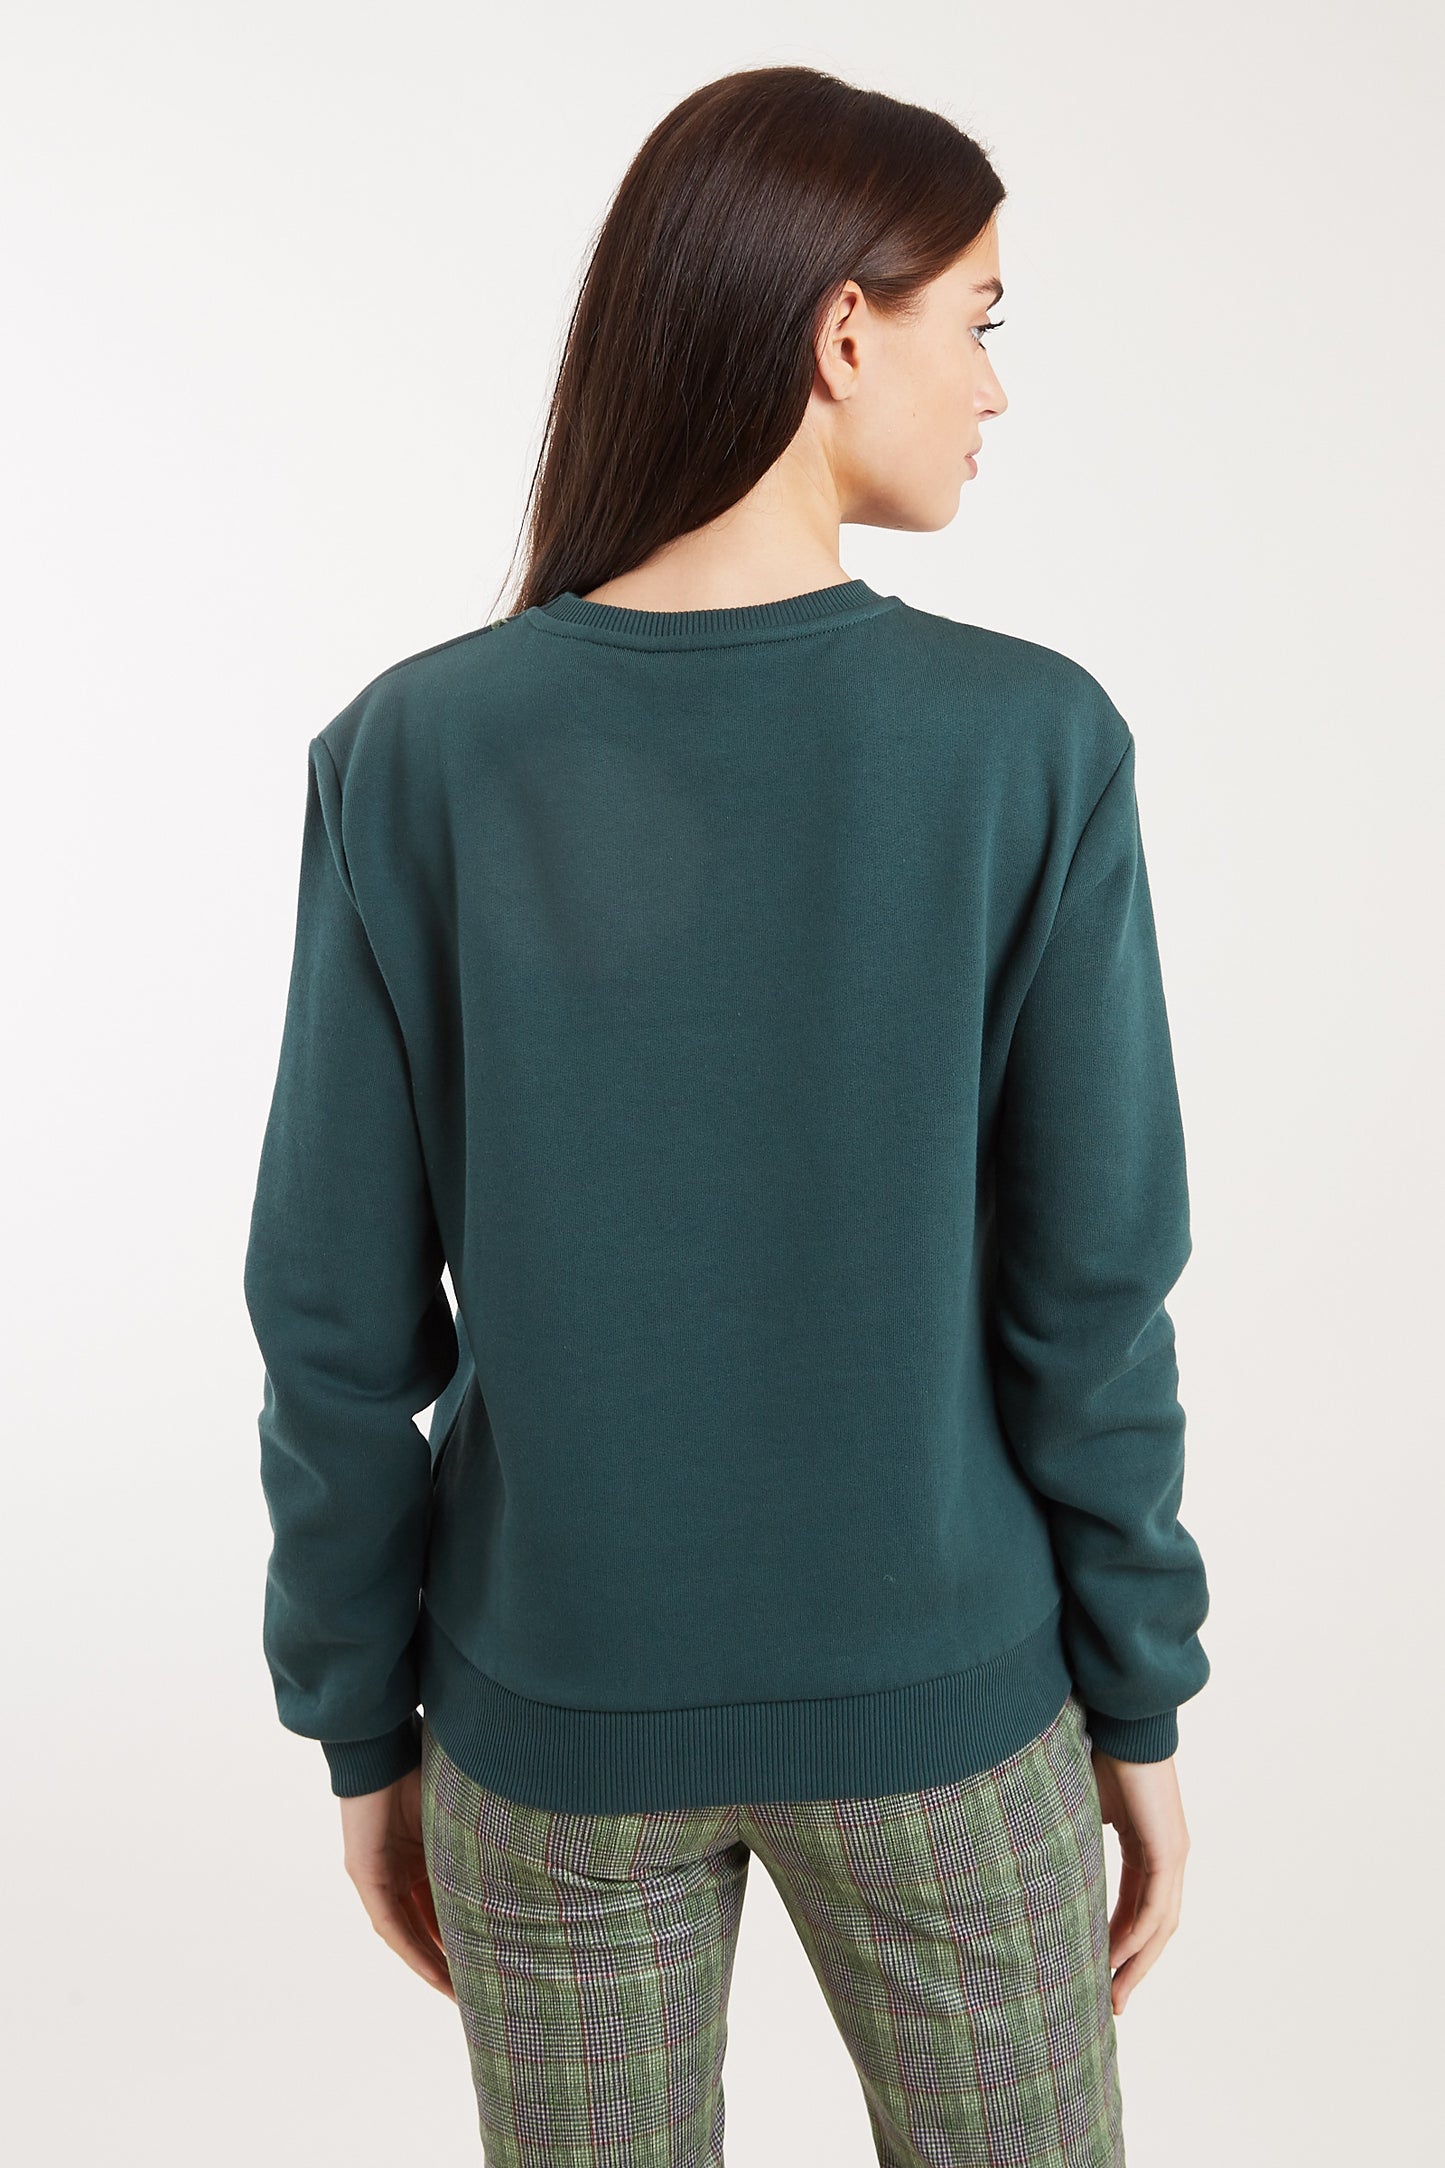 Jan Daisy Chain Sweater in Green